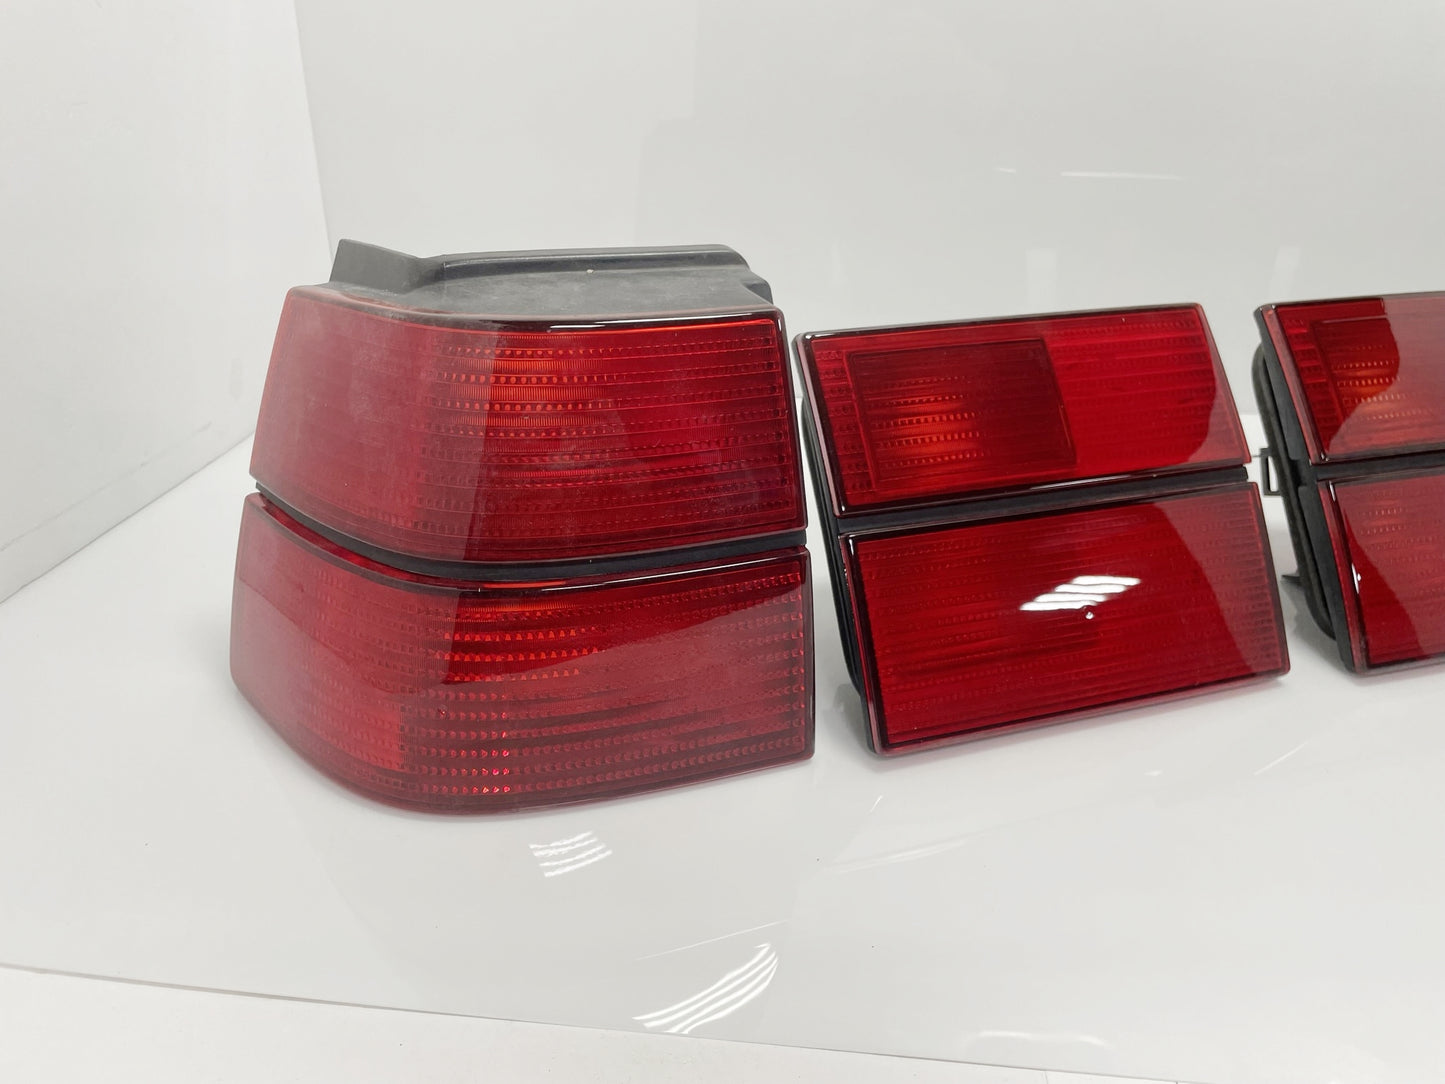 VW Corrado All Red Taillights